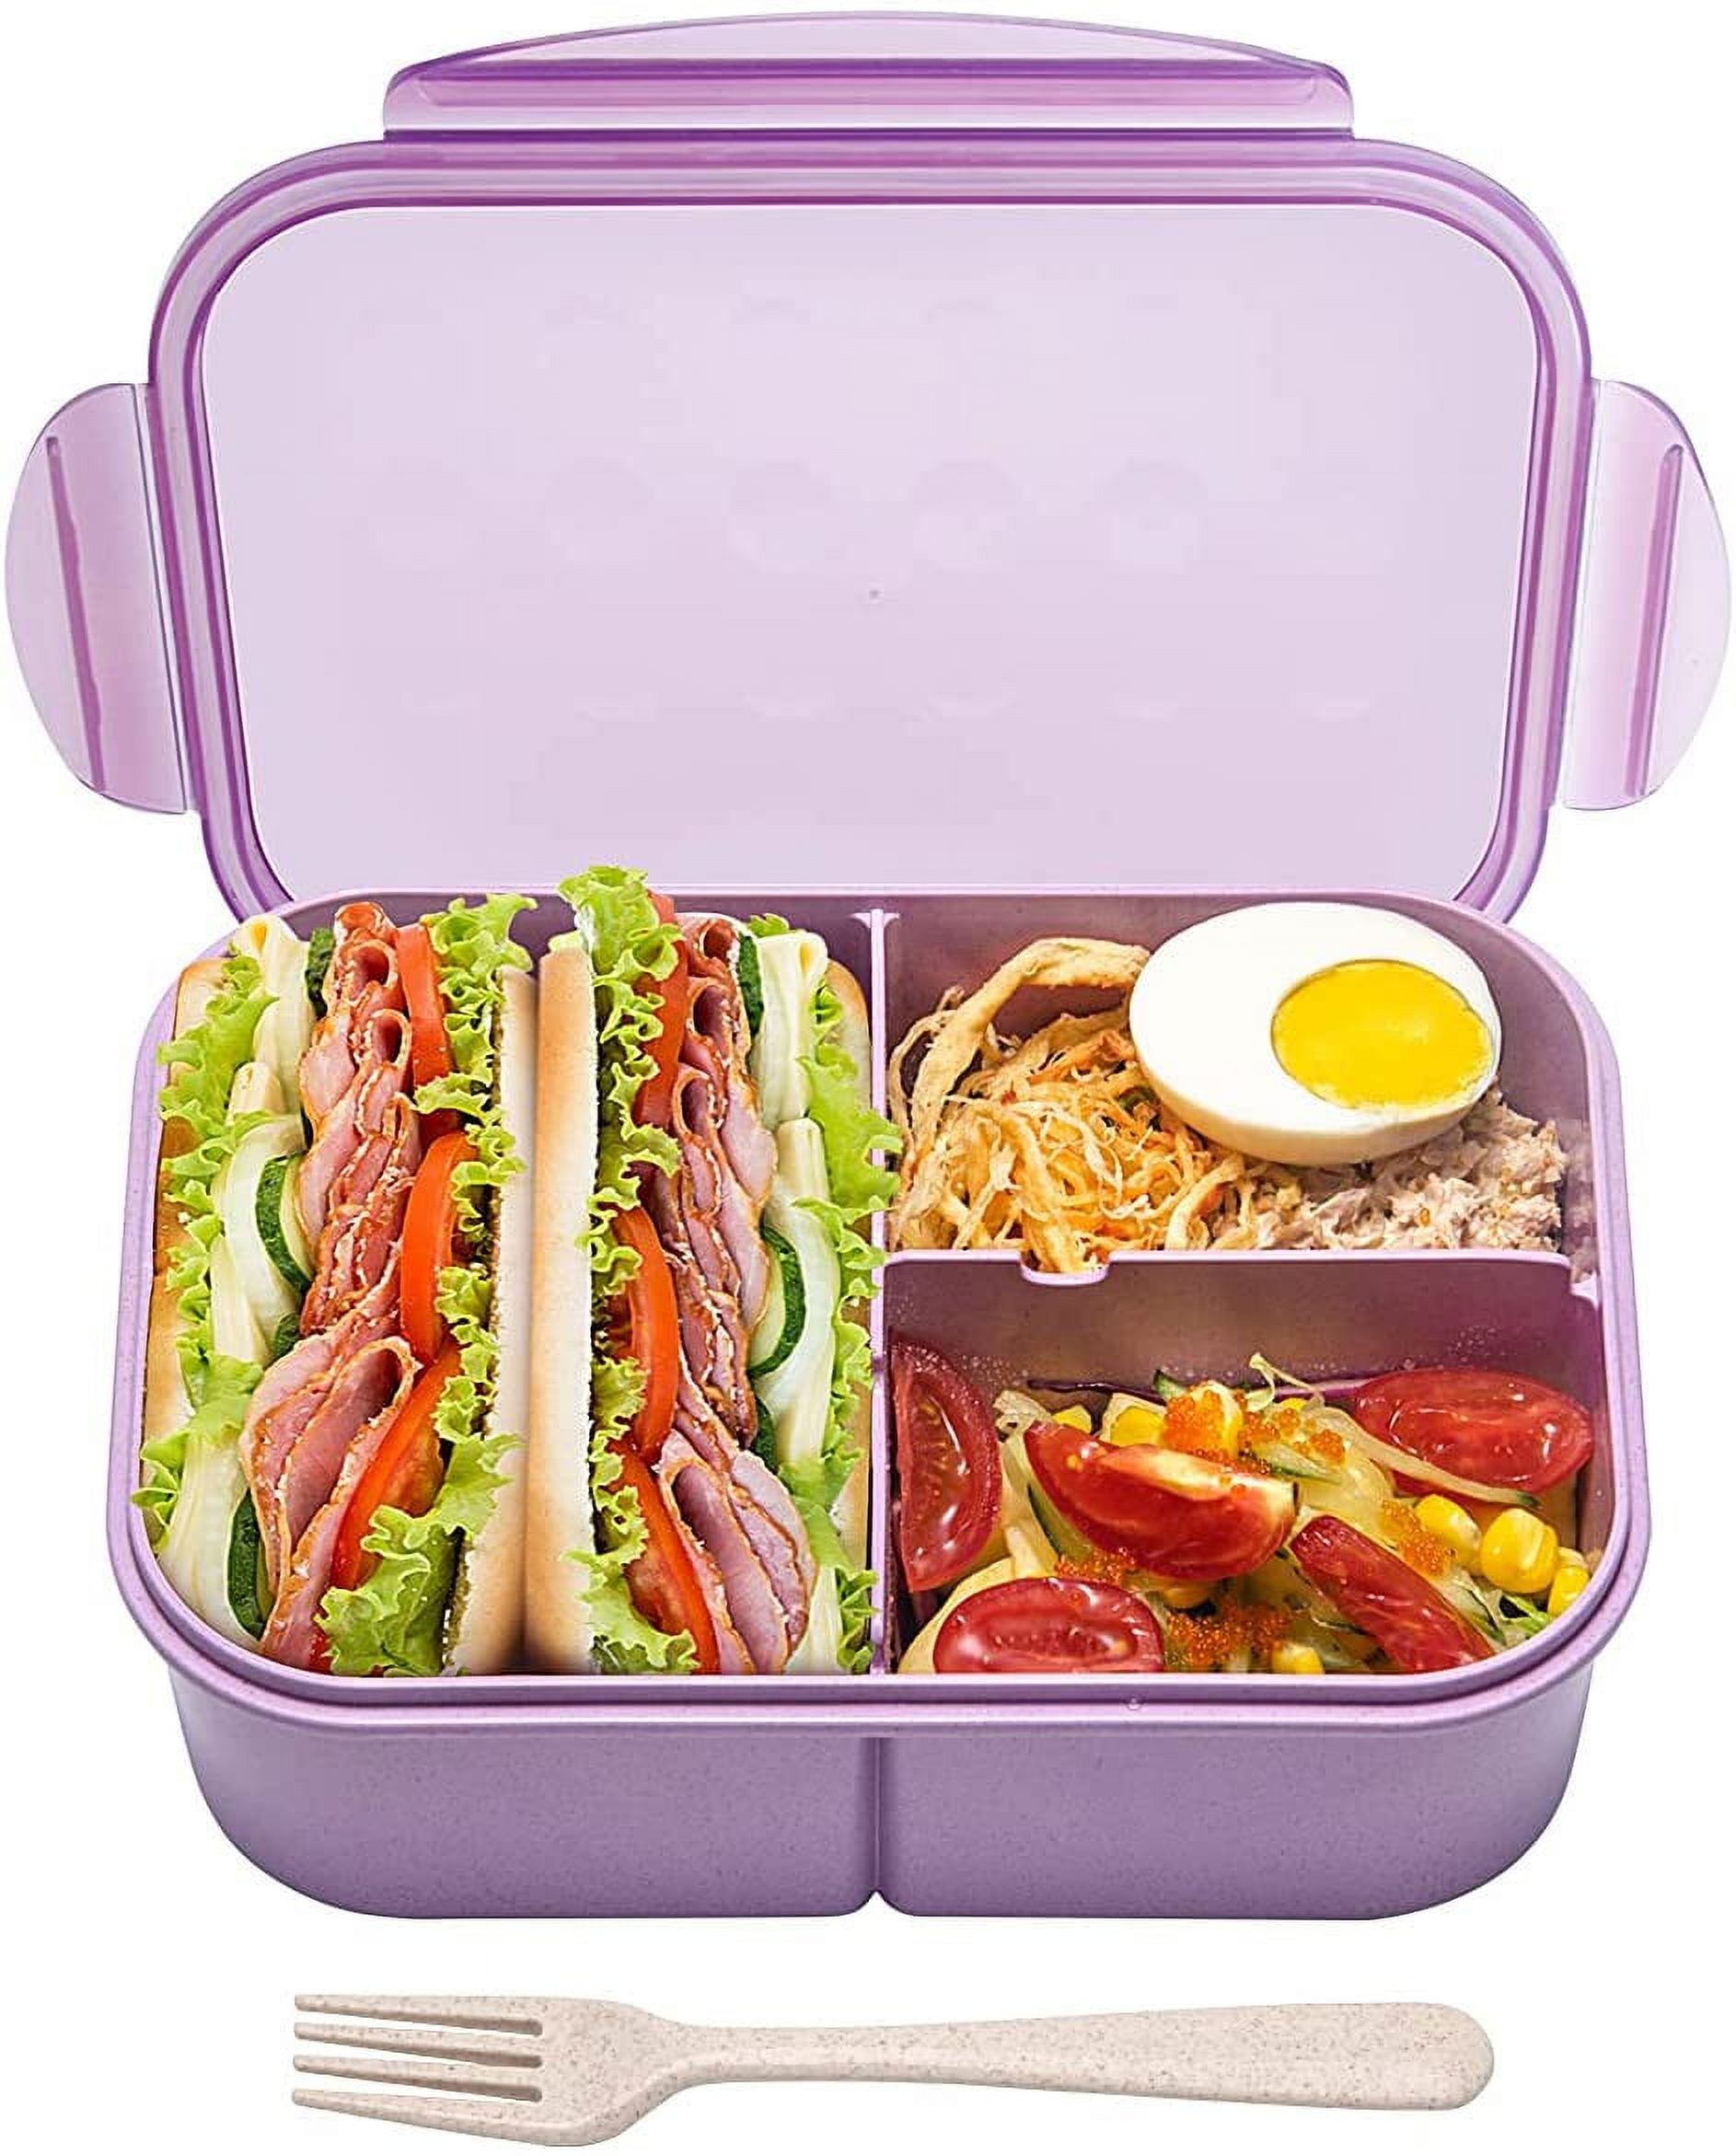 Signoraware Stainless Steel Bento Box Adult Lunch Box For Men, Women, Kids  Bento Lunch Box Leak Proo…See more Signoraware Stainless Steel Bento Box